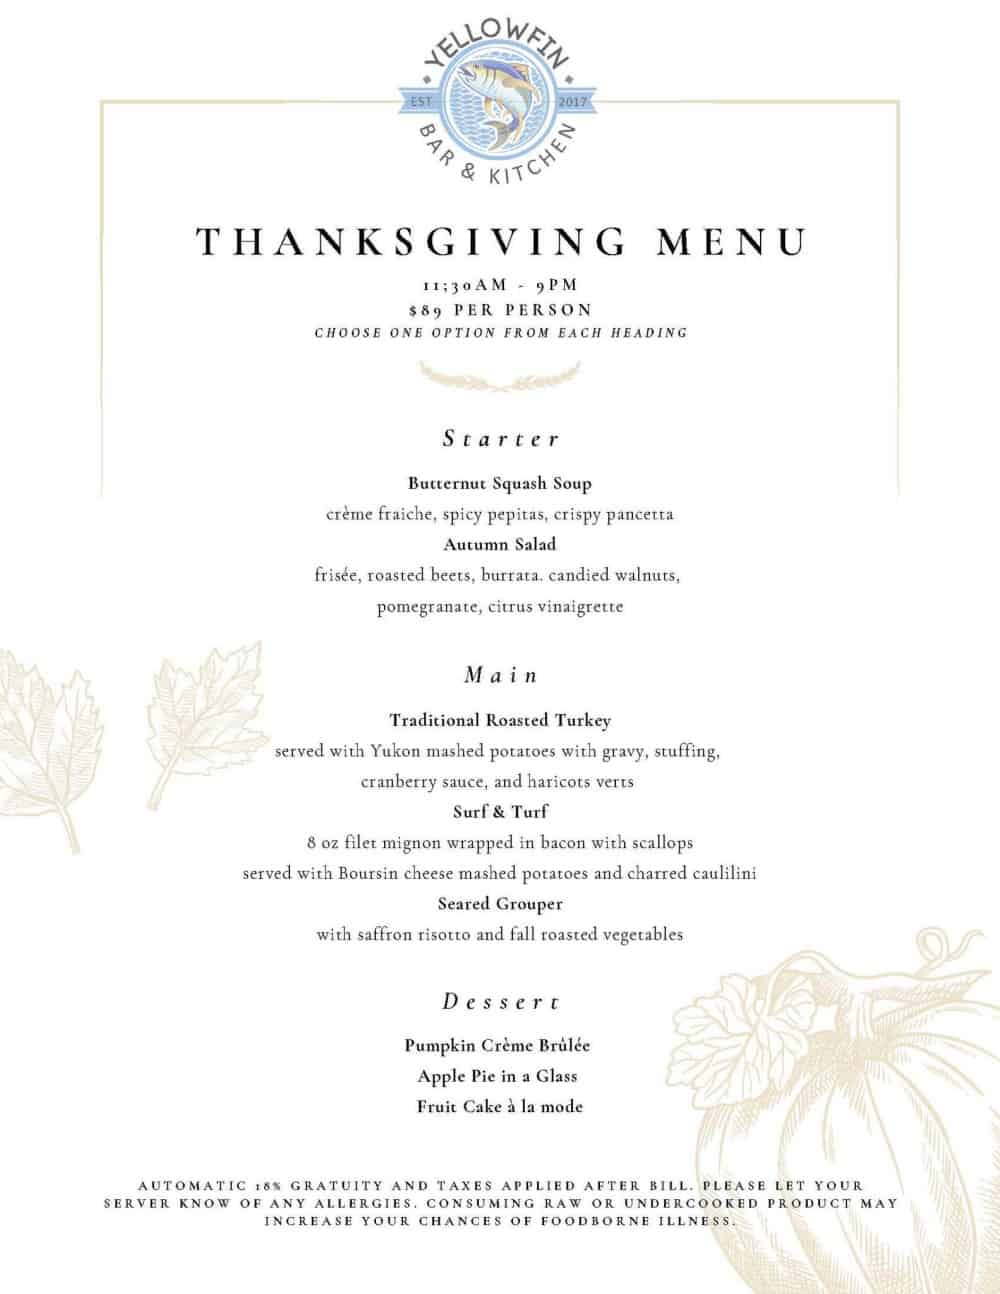 Yellowfin Thanksgiving menu